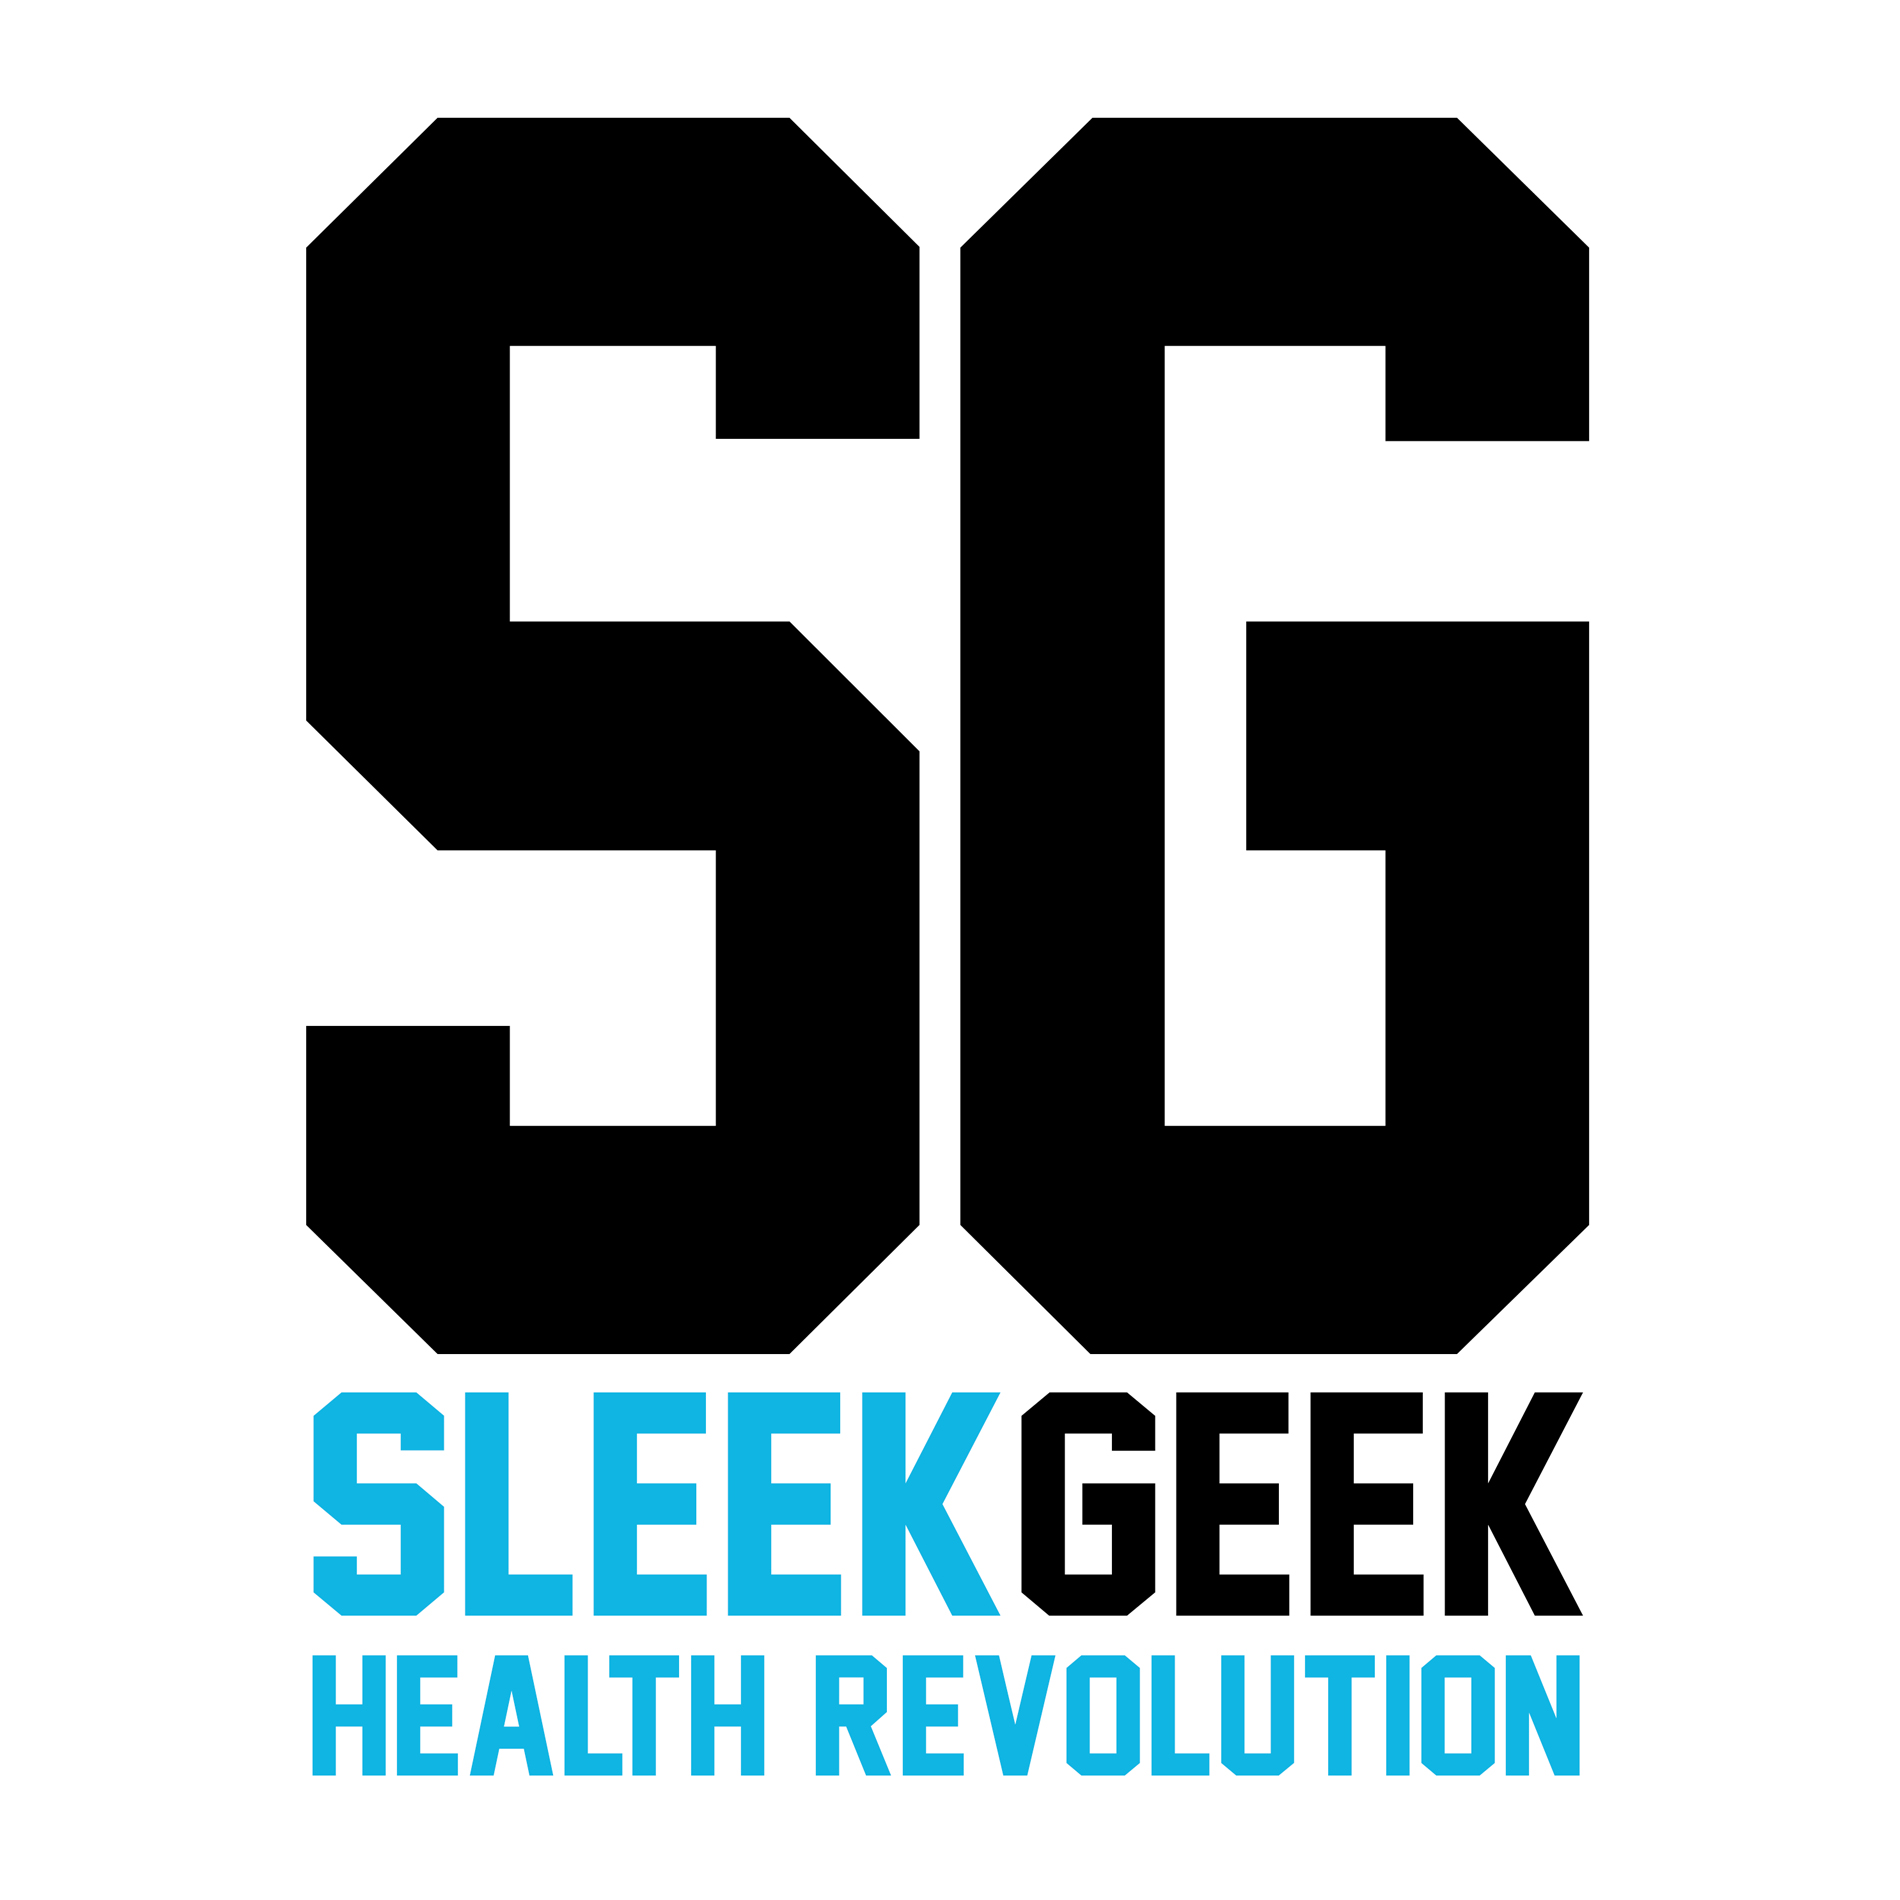 The Sleekgeek Health Revolution